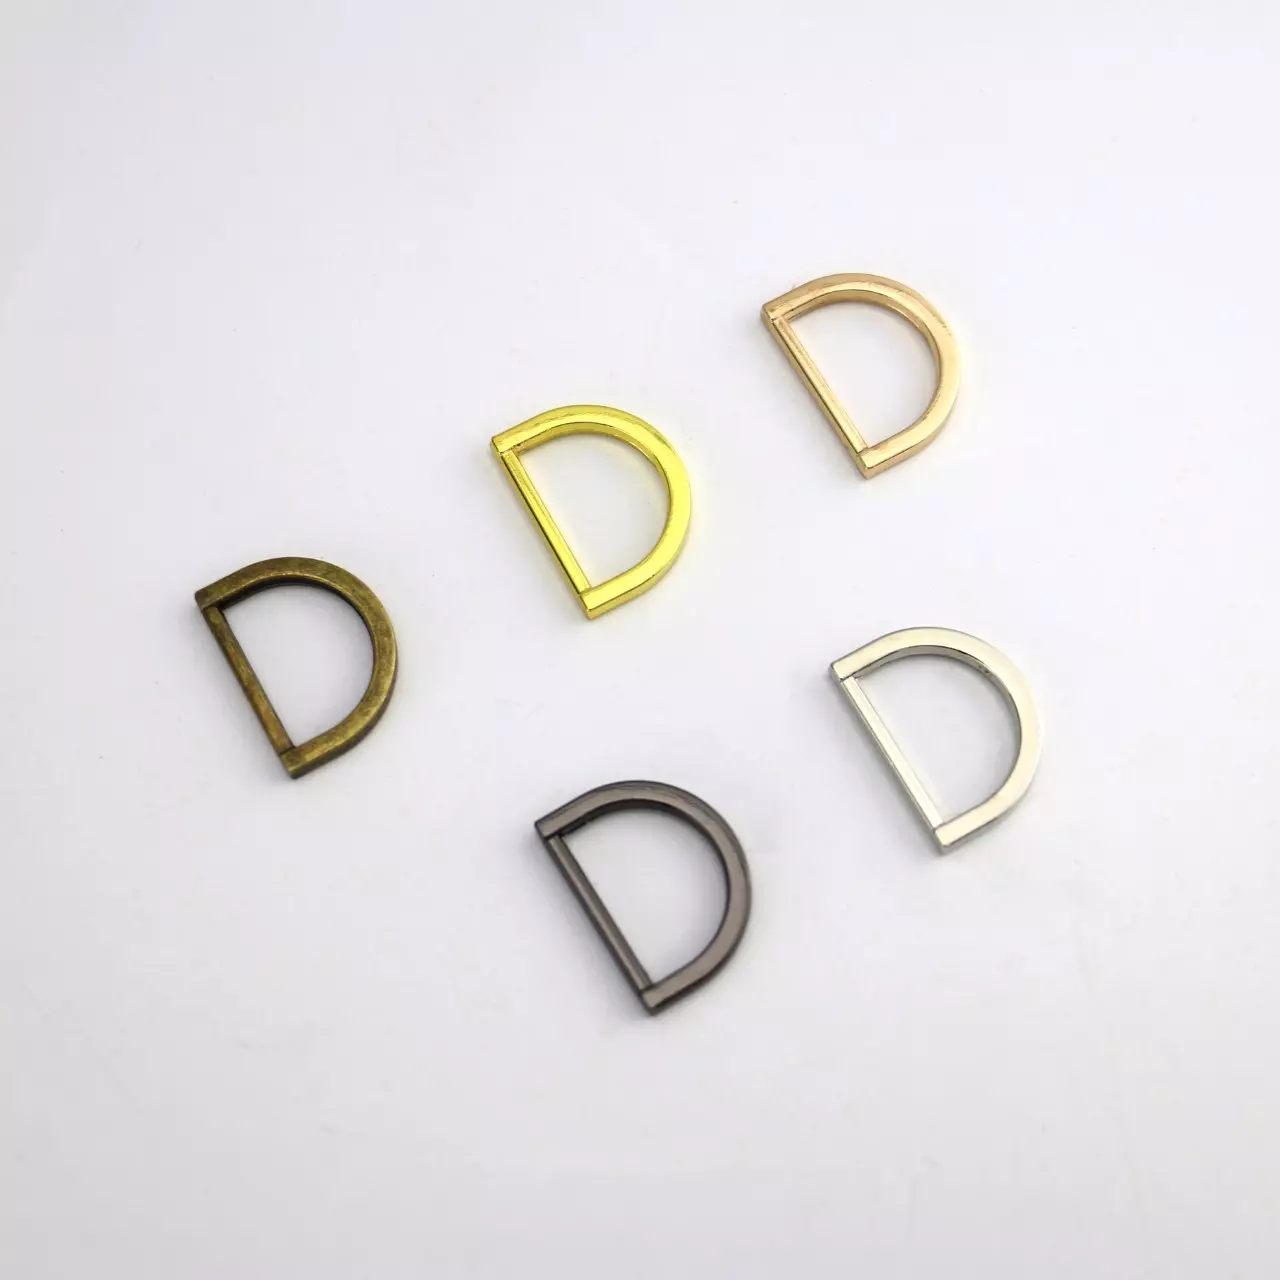 6 Pcs Flat D-ring Buckles Metal D-ring Findings D Rings High